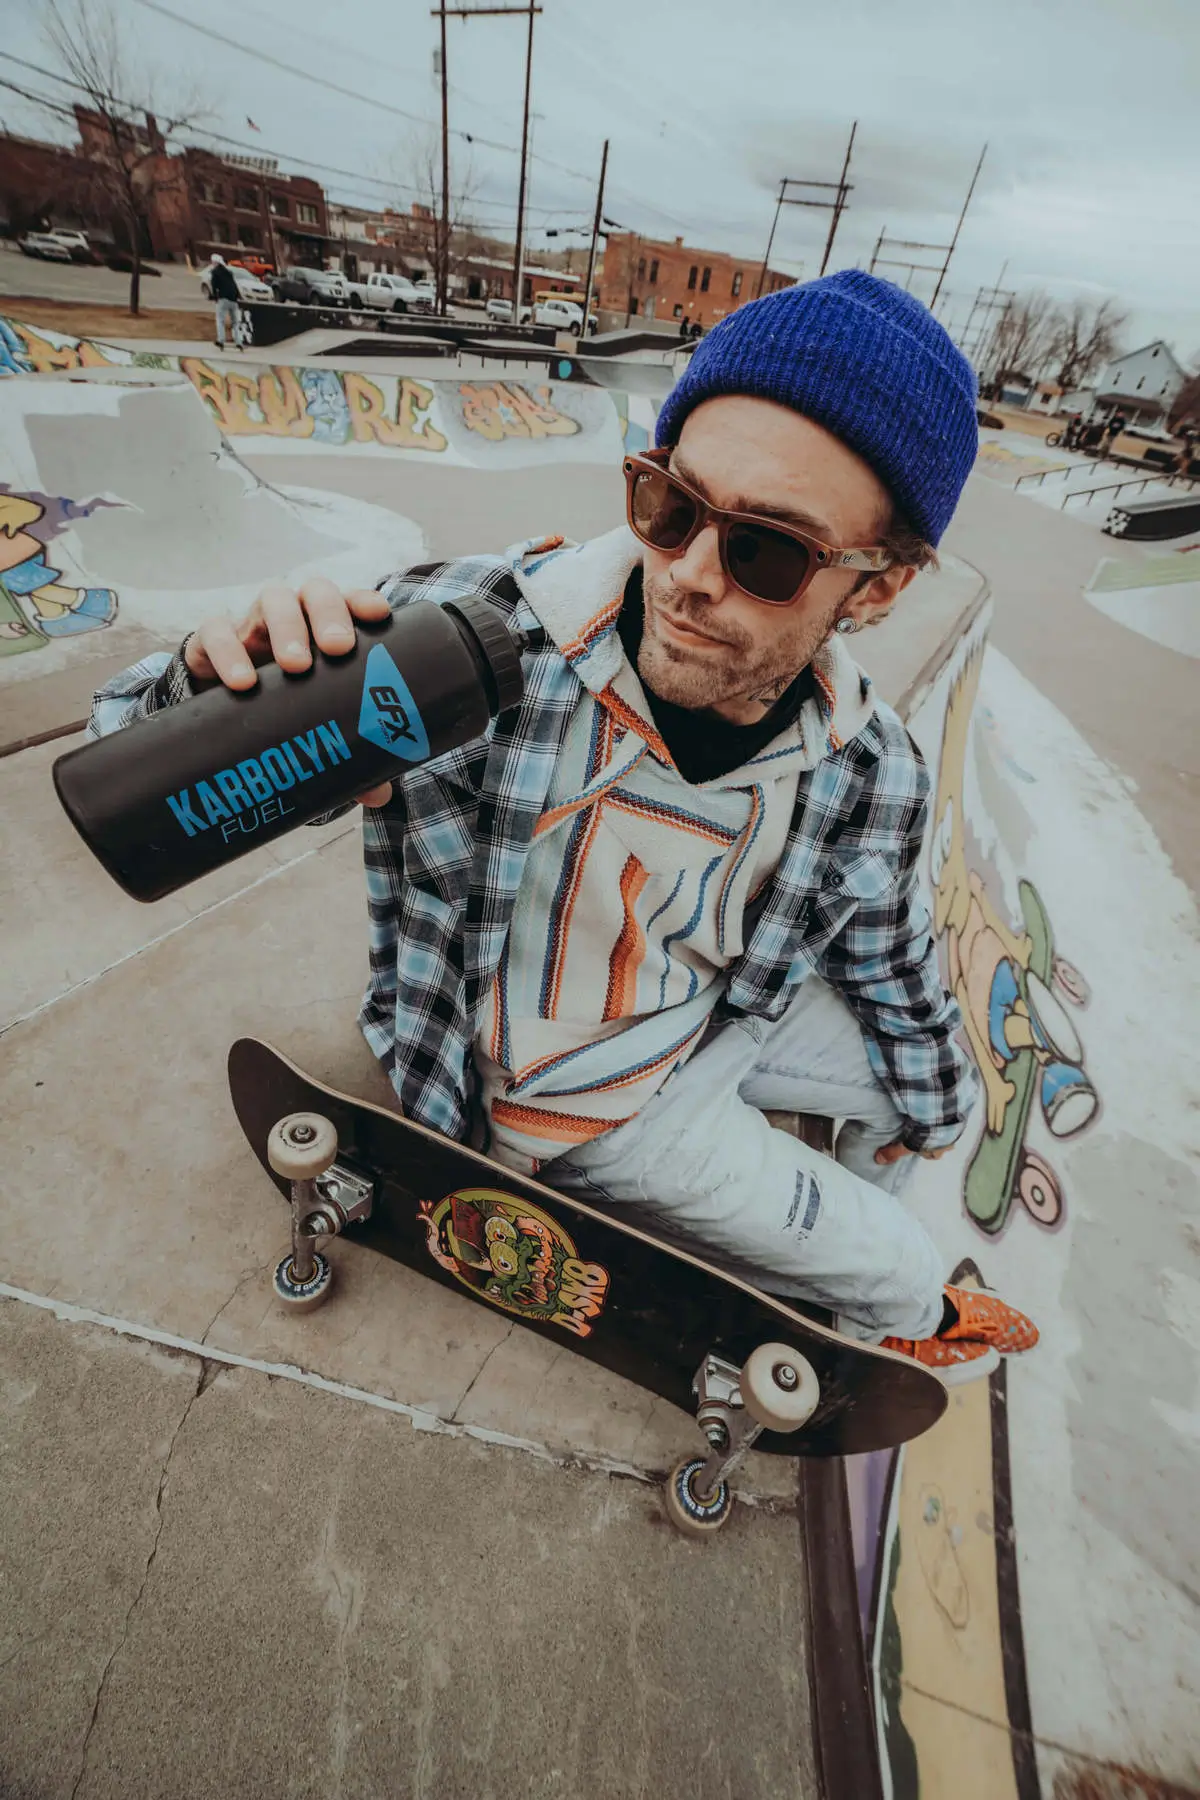 Skateboarder drinking Karbolyn